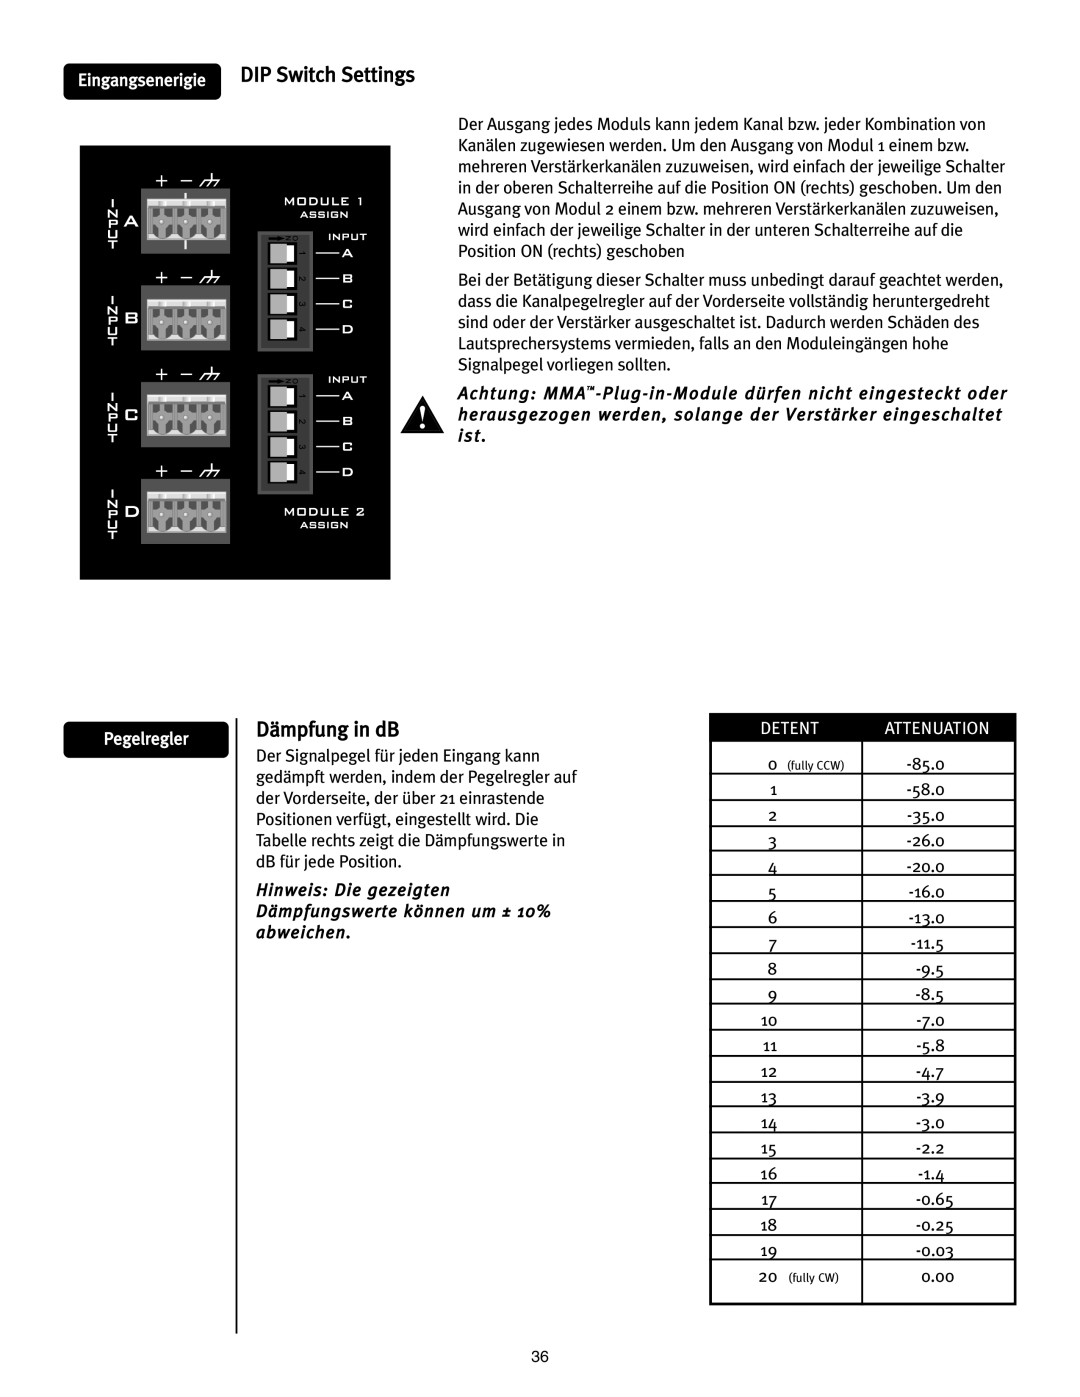 Peavey ICS 4200 user manual DIP Switch Settings, Eingangsenerigie, Pegelregler, Detent, Attenuation 